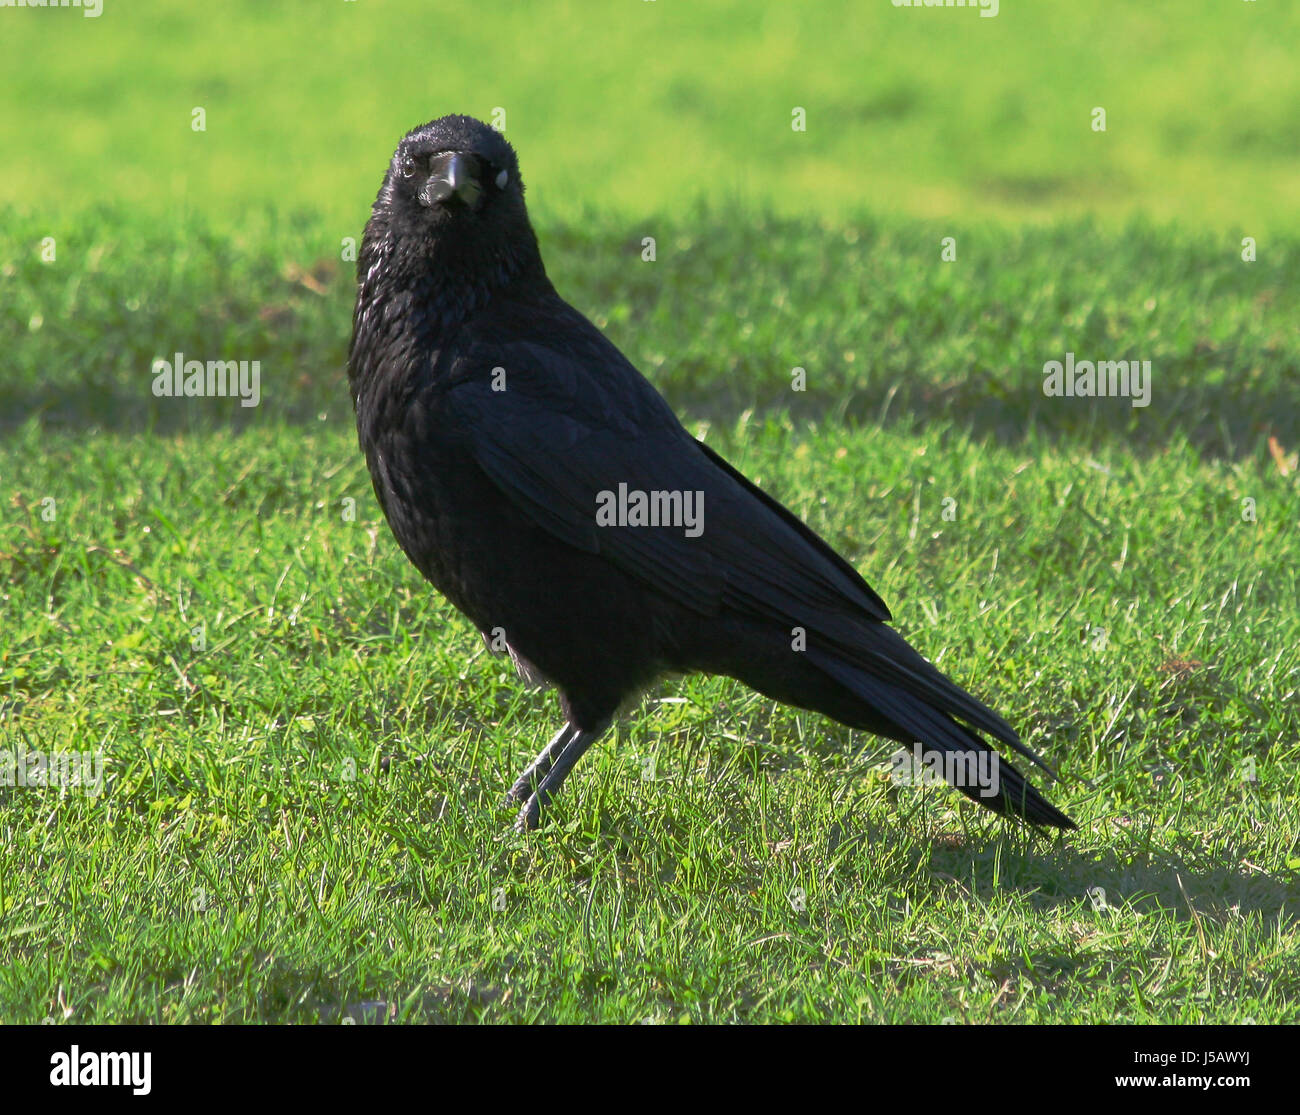 bird animals black swarthy jetblack deep black birds feathering wildlife crow Stock Photo